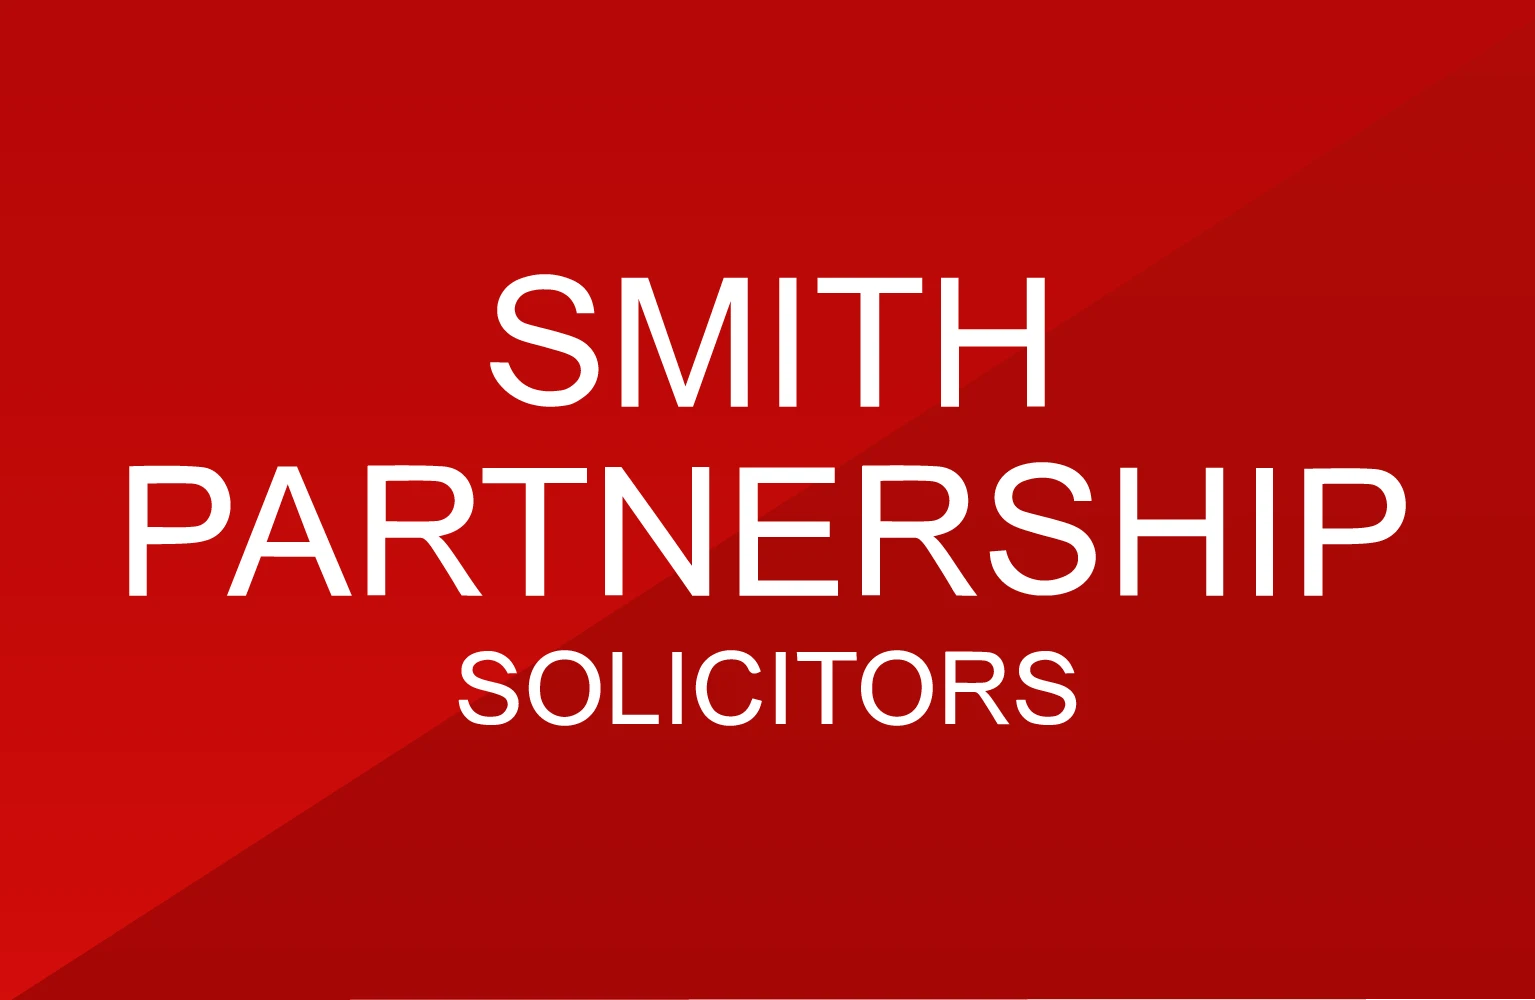 Smith Partnerships